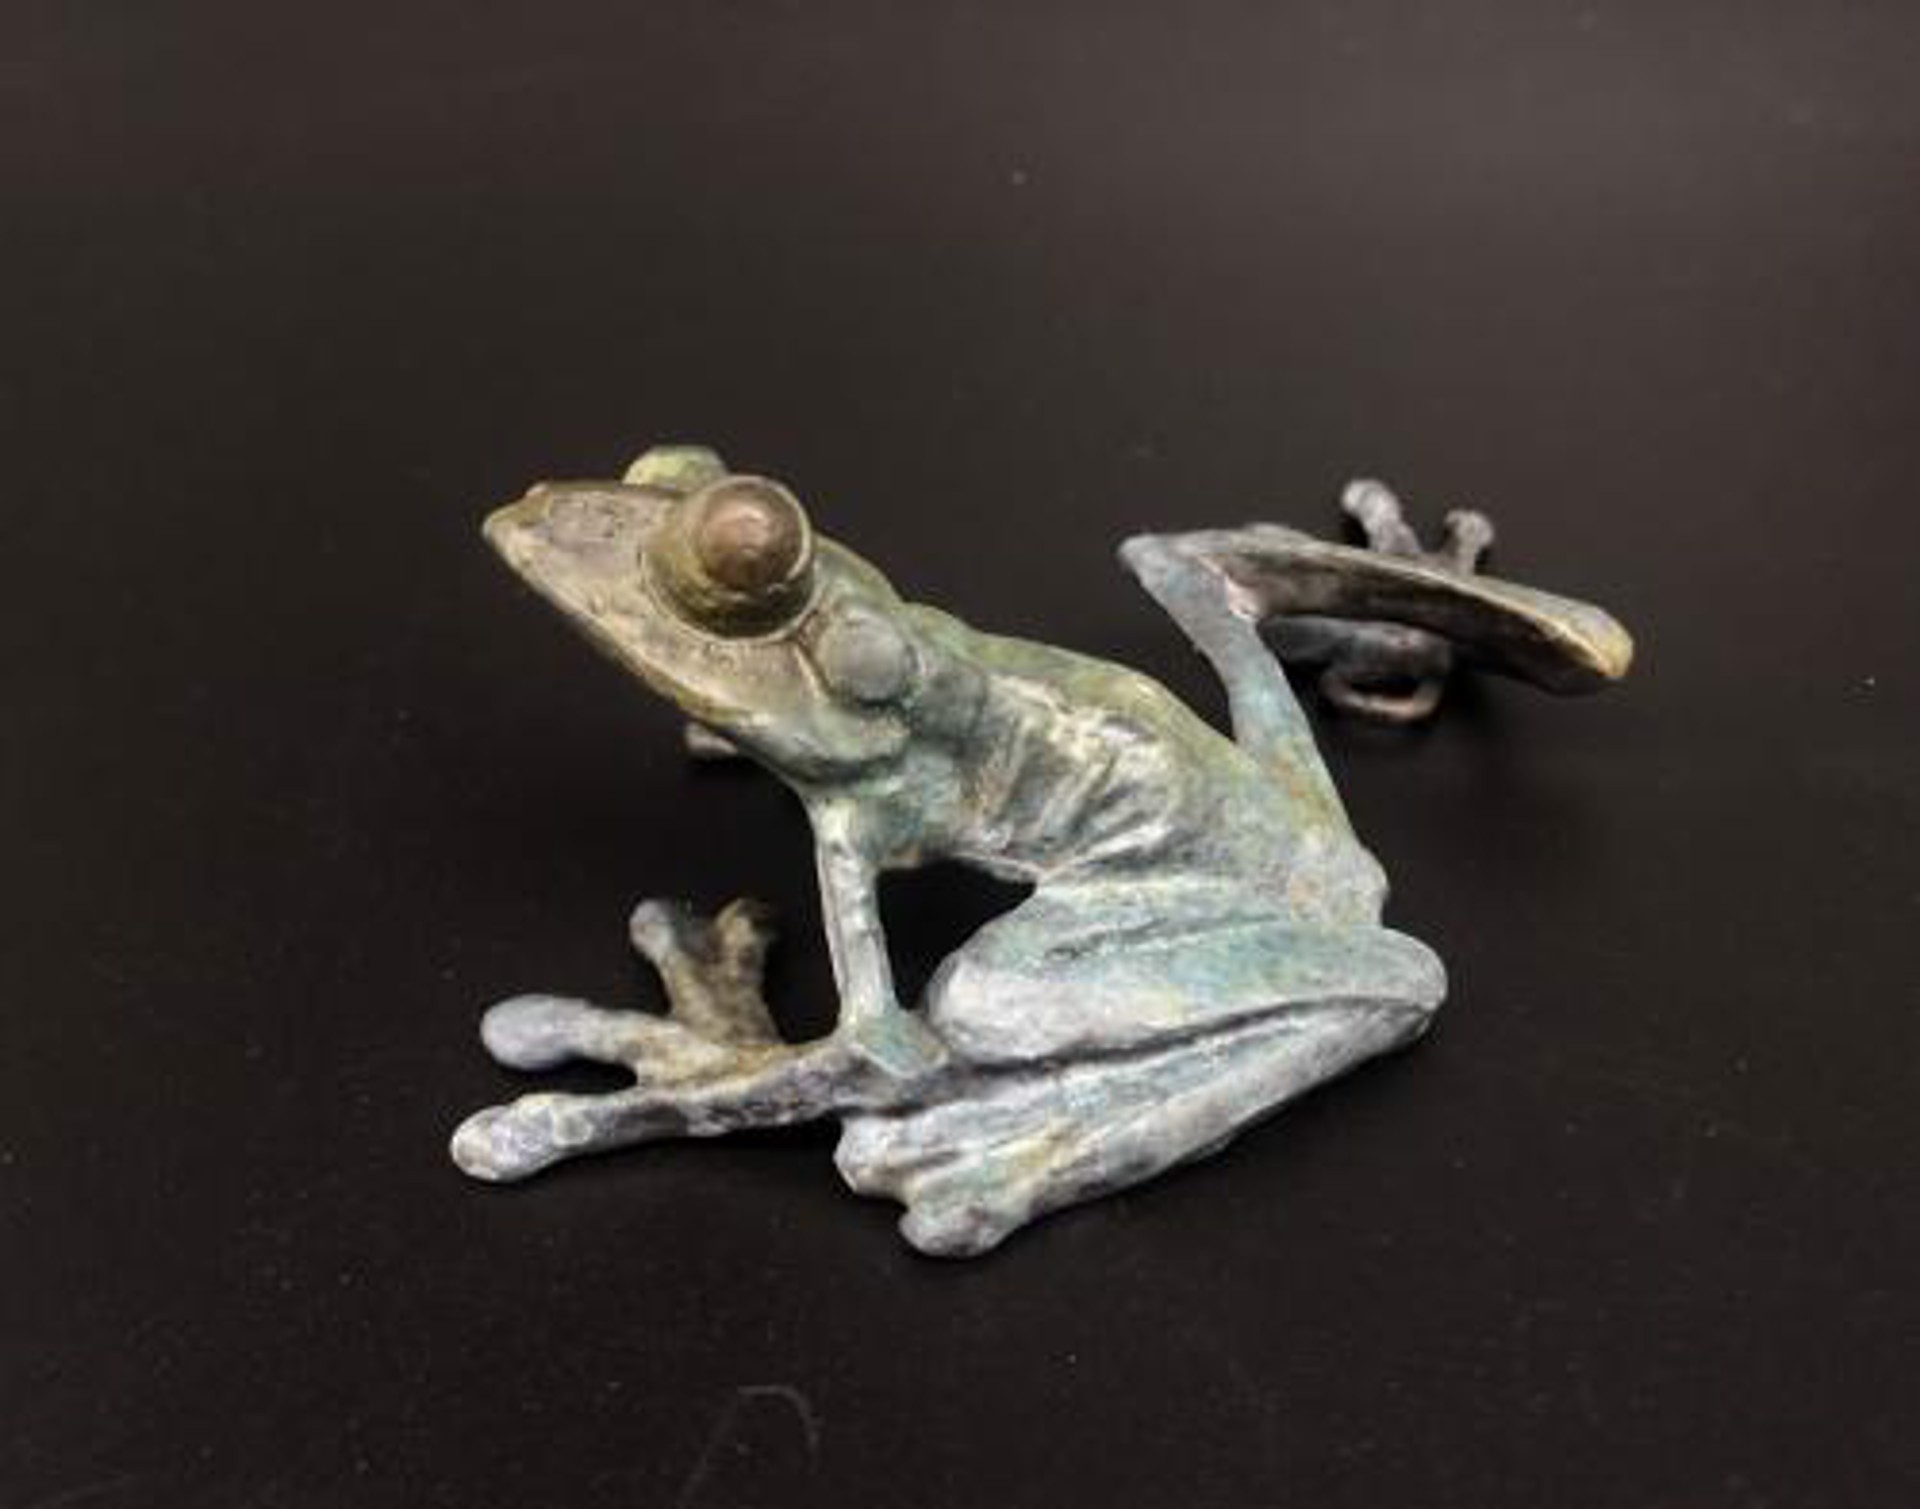 Frog B by Dan Chen